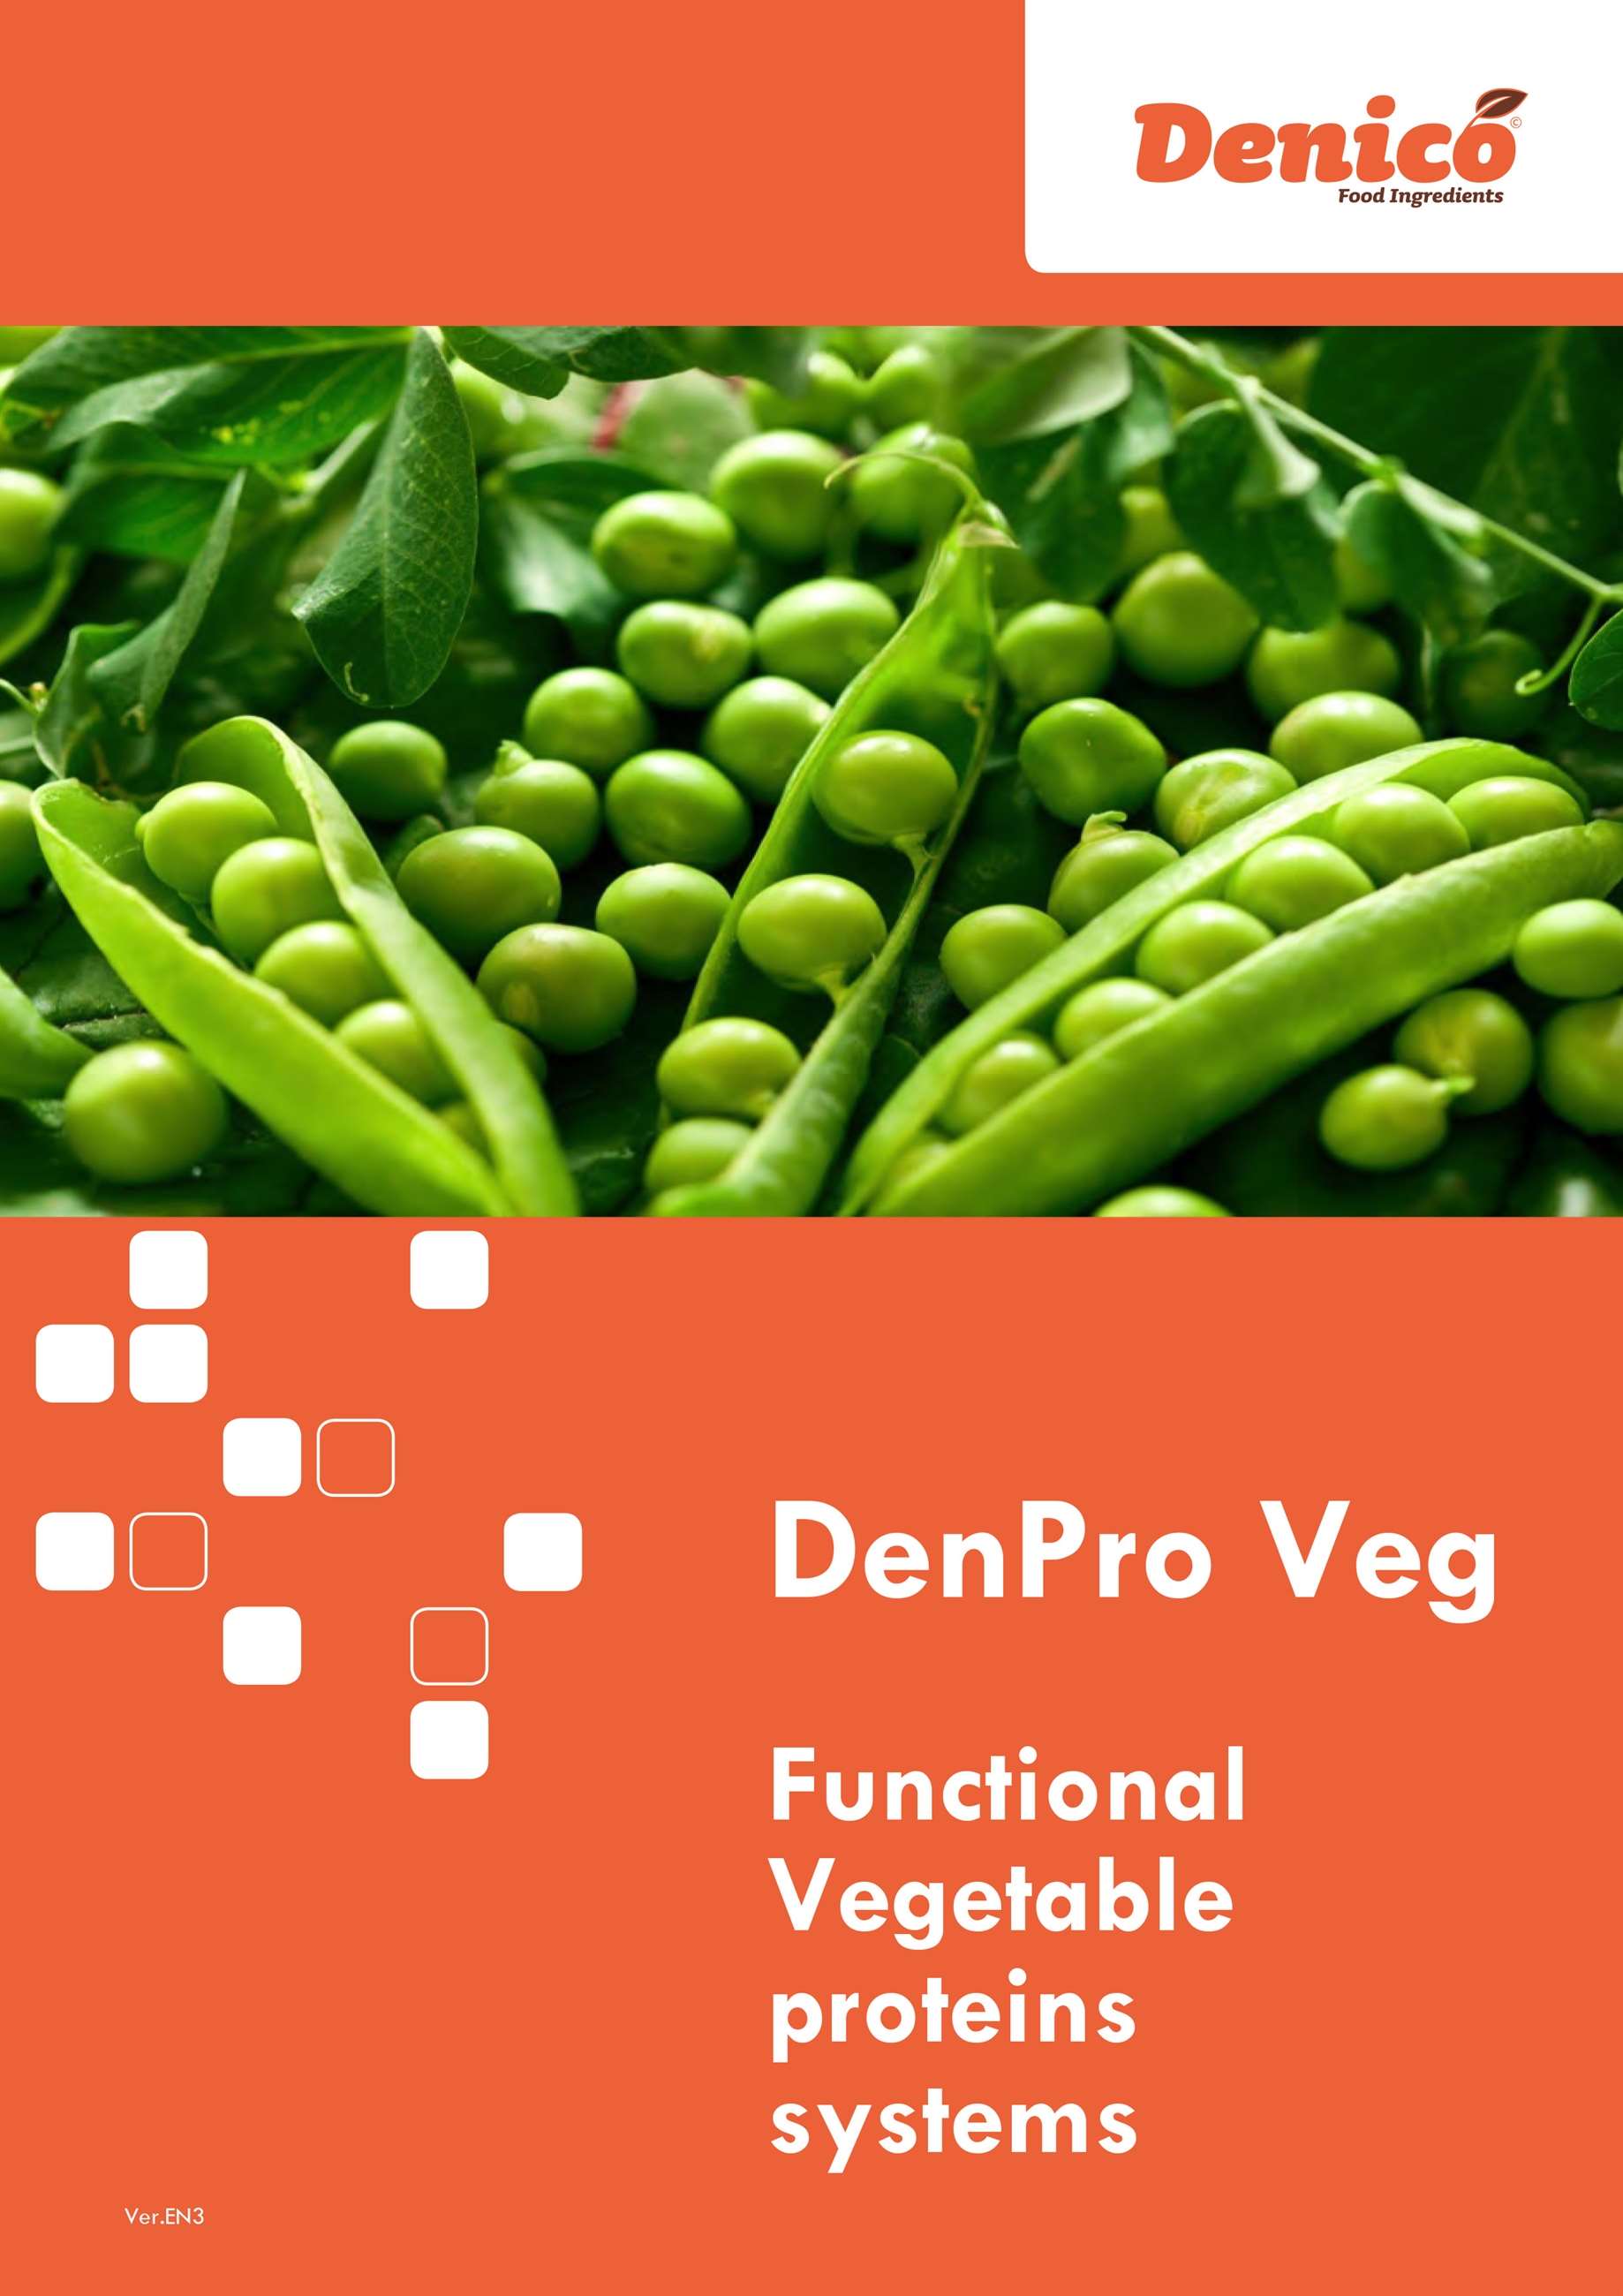 denpro-veg-series-en03_web-1